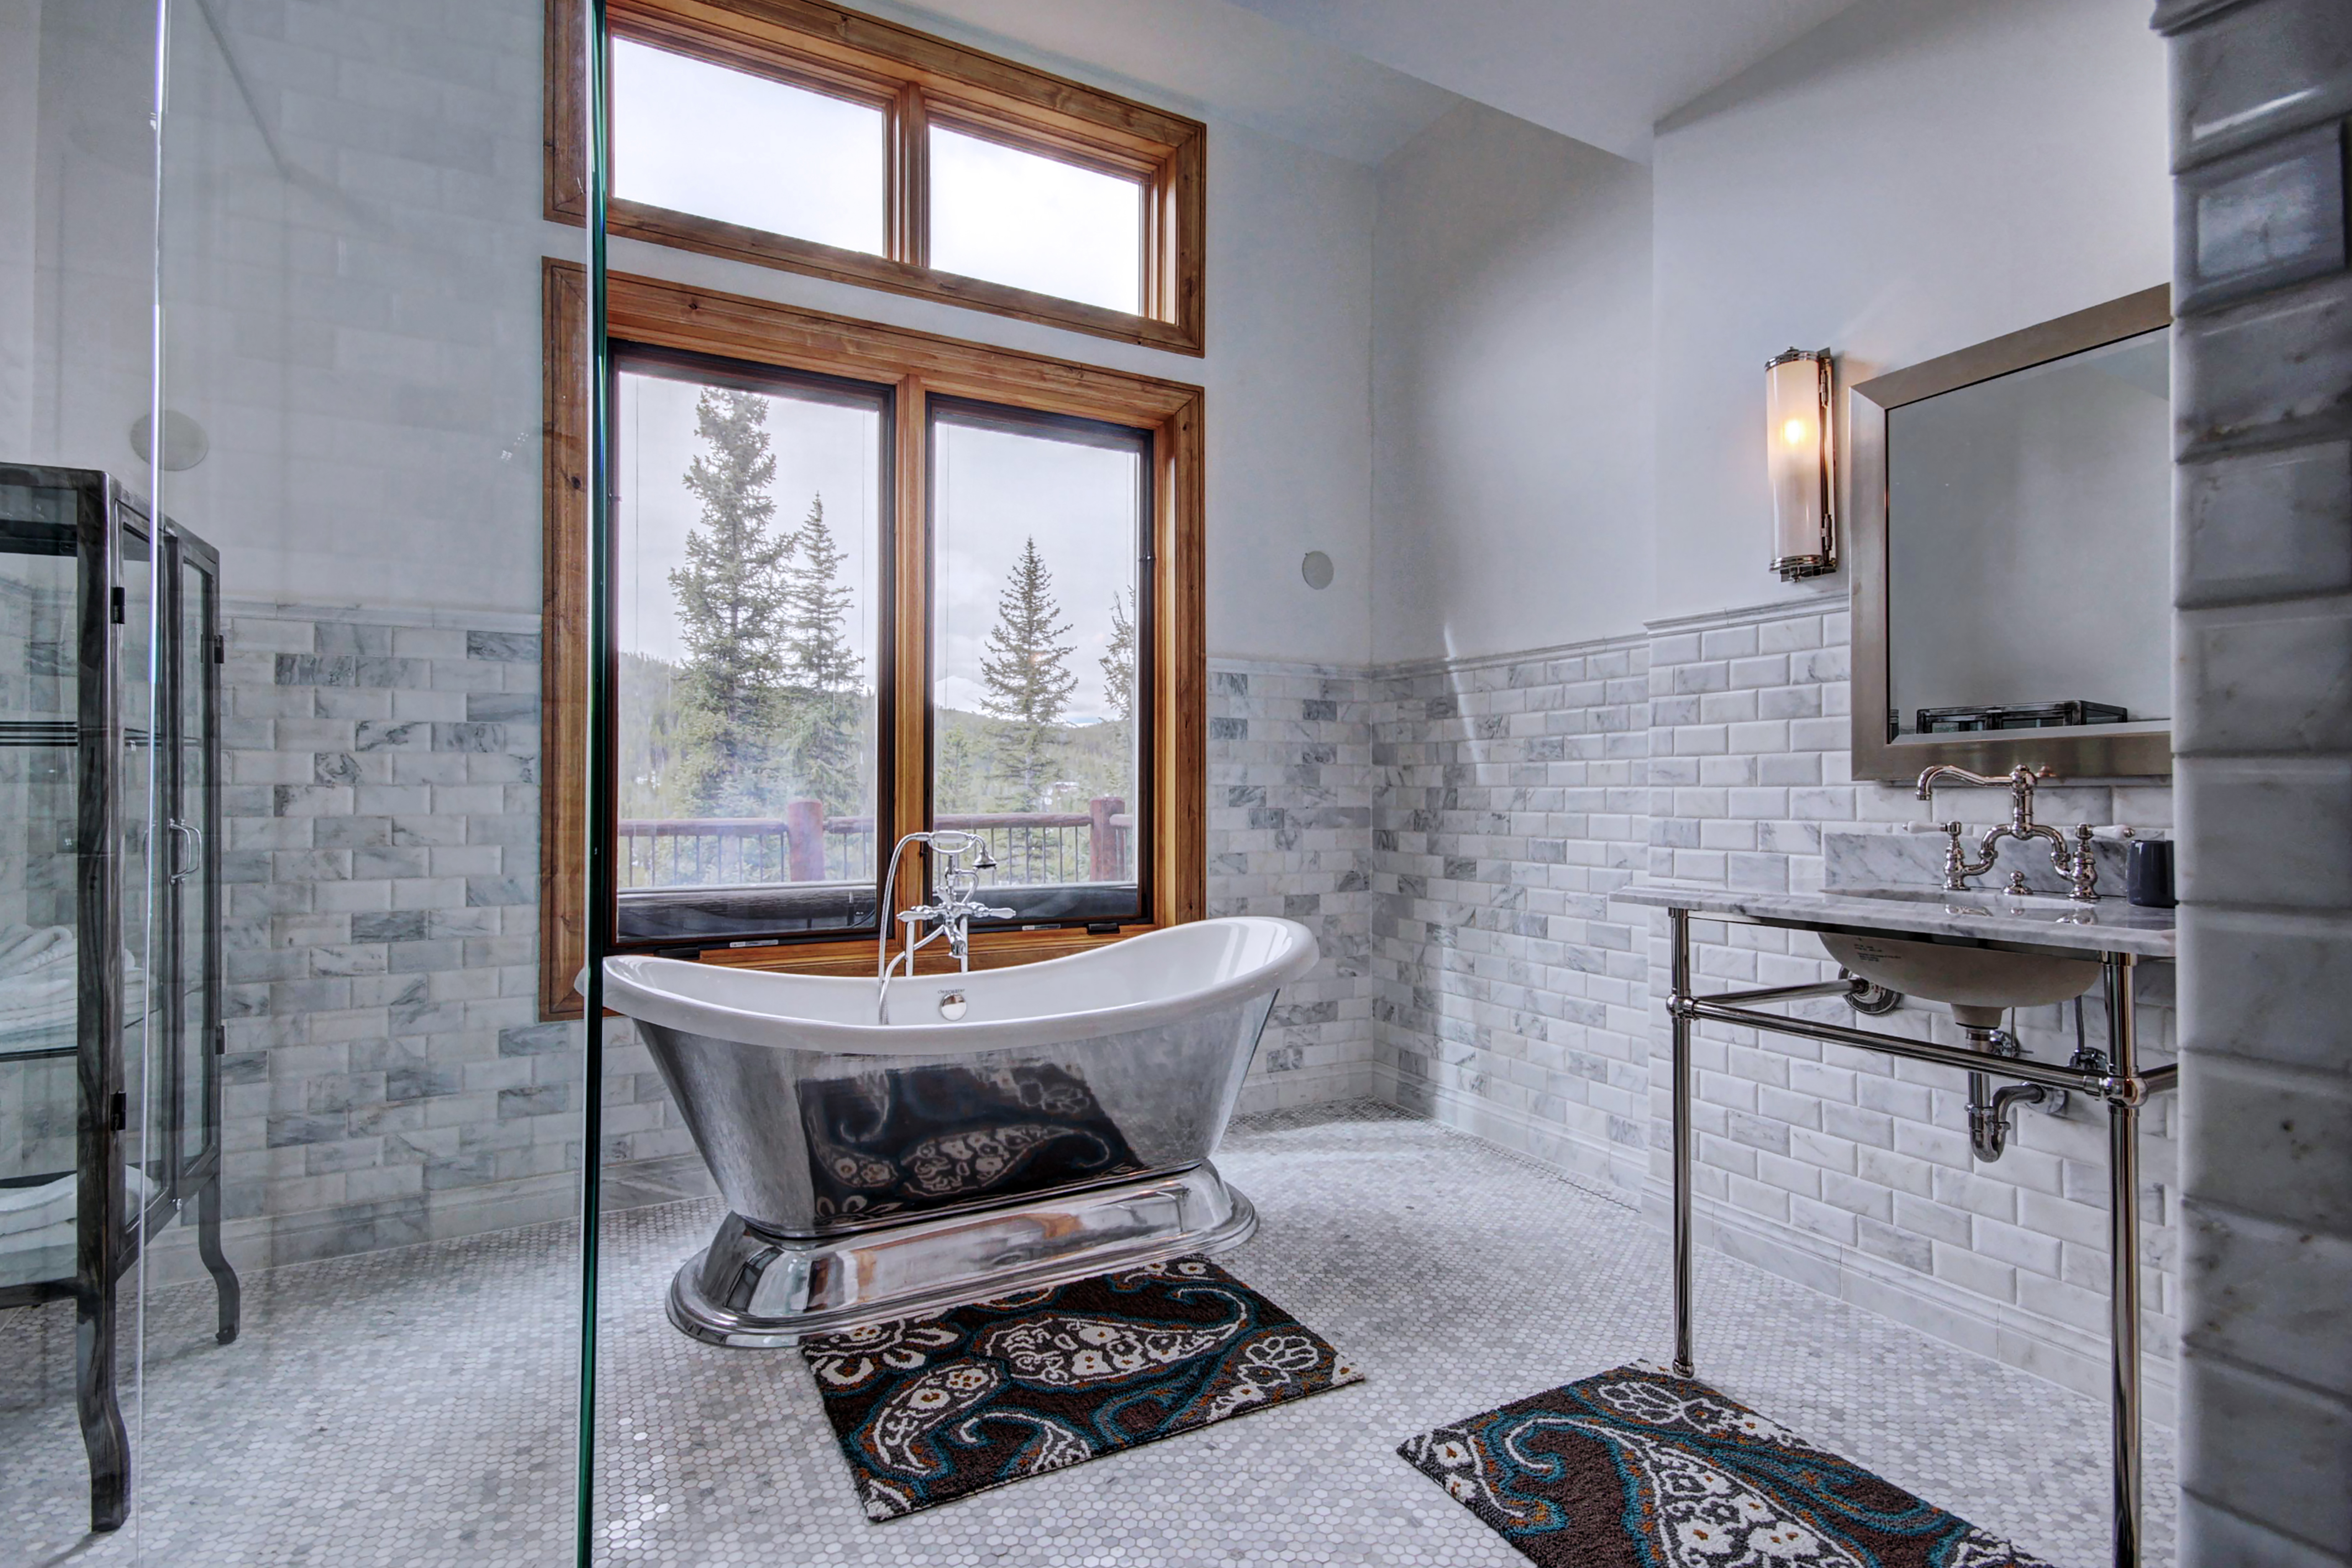 Queen bathroom with soaking tub and walk in shower - Clowsgill Holme Breckenridge Vacation Rental